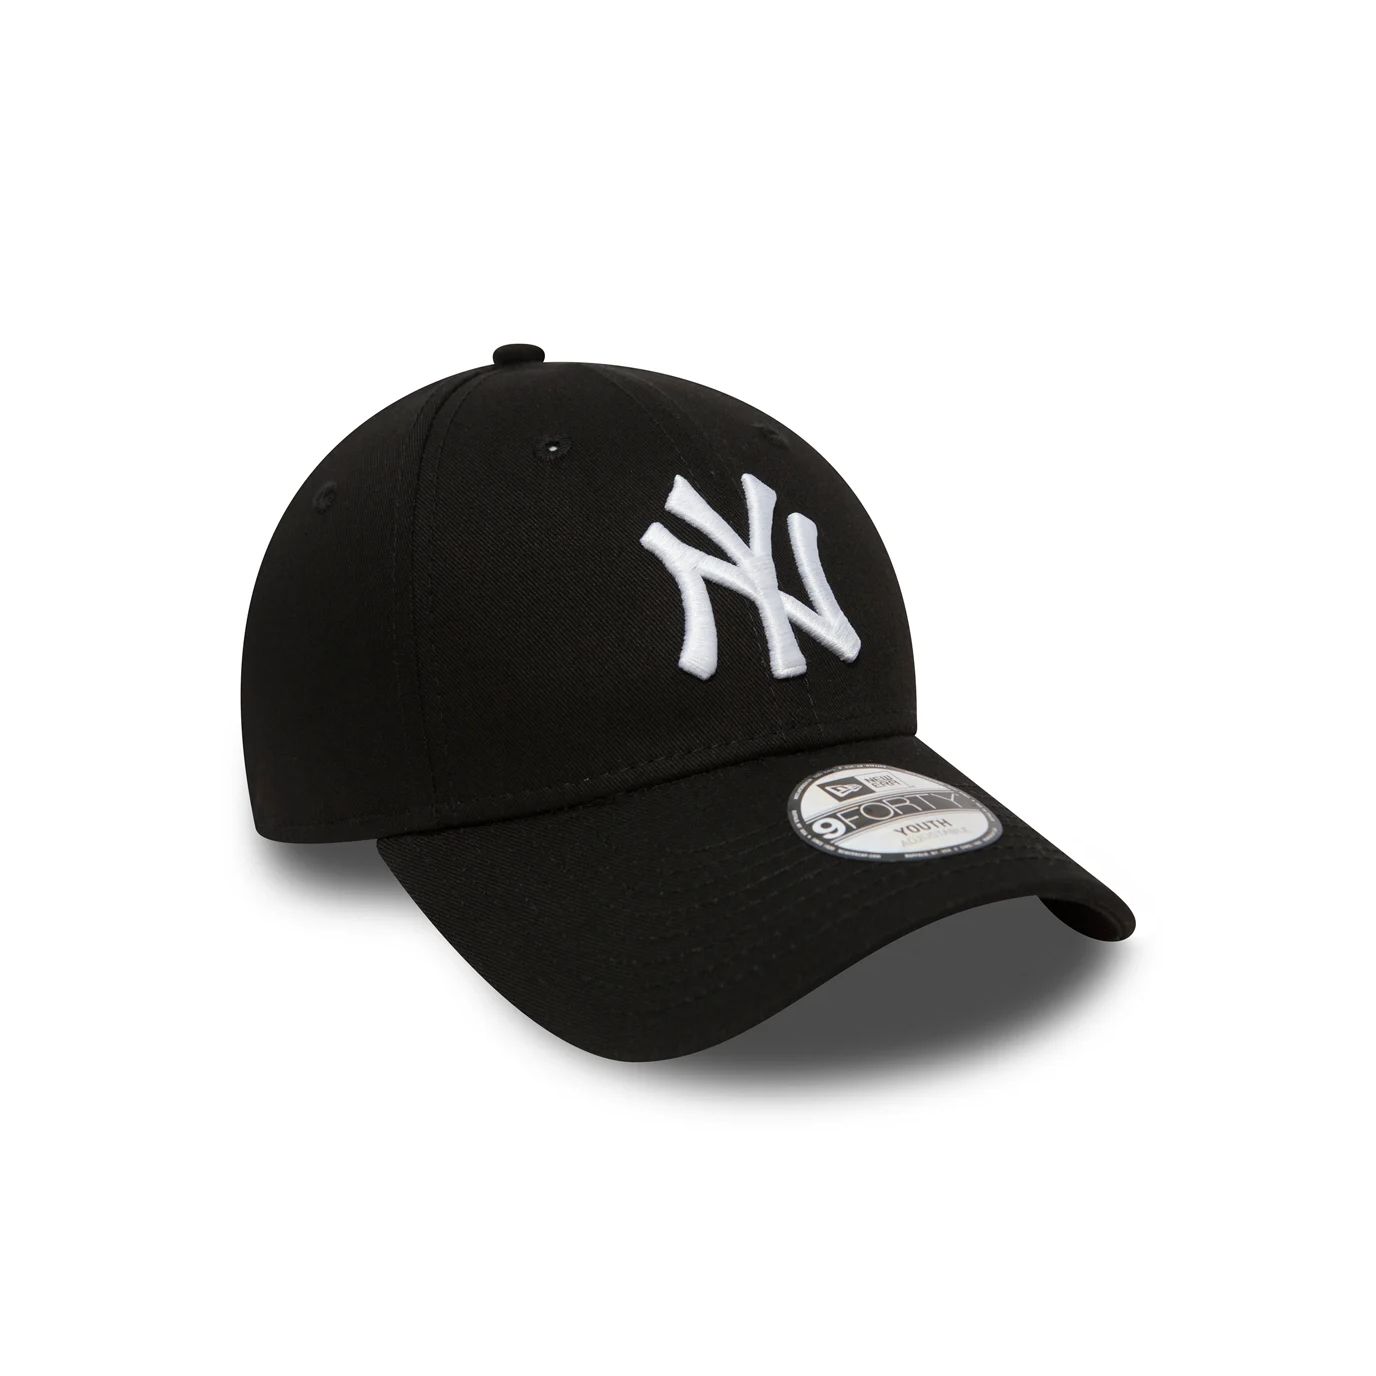 La gorra de béisbol que debes tener - Gorra Yankees